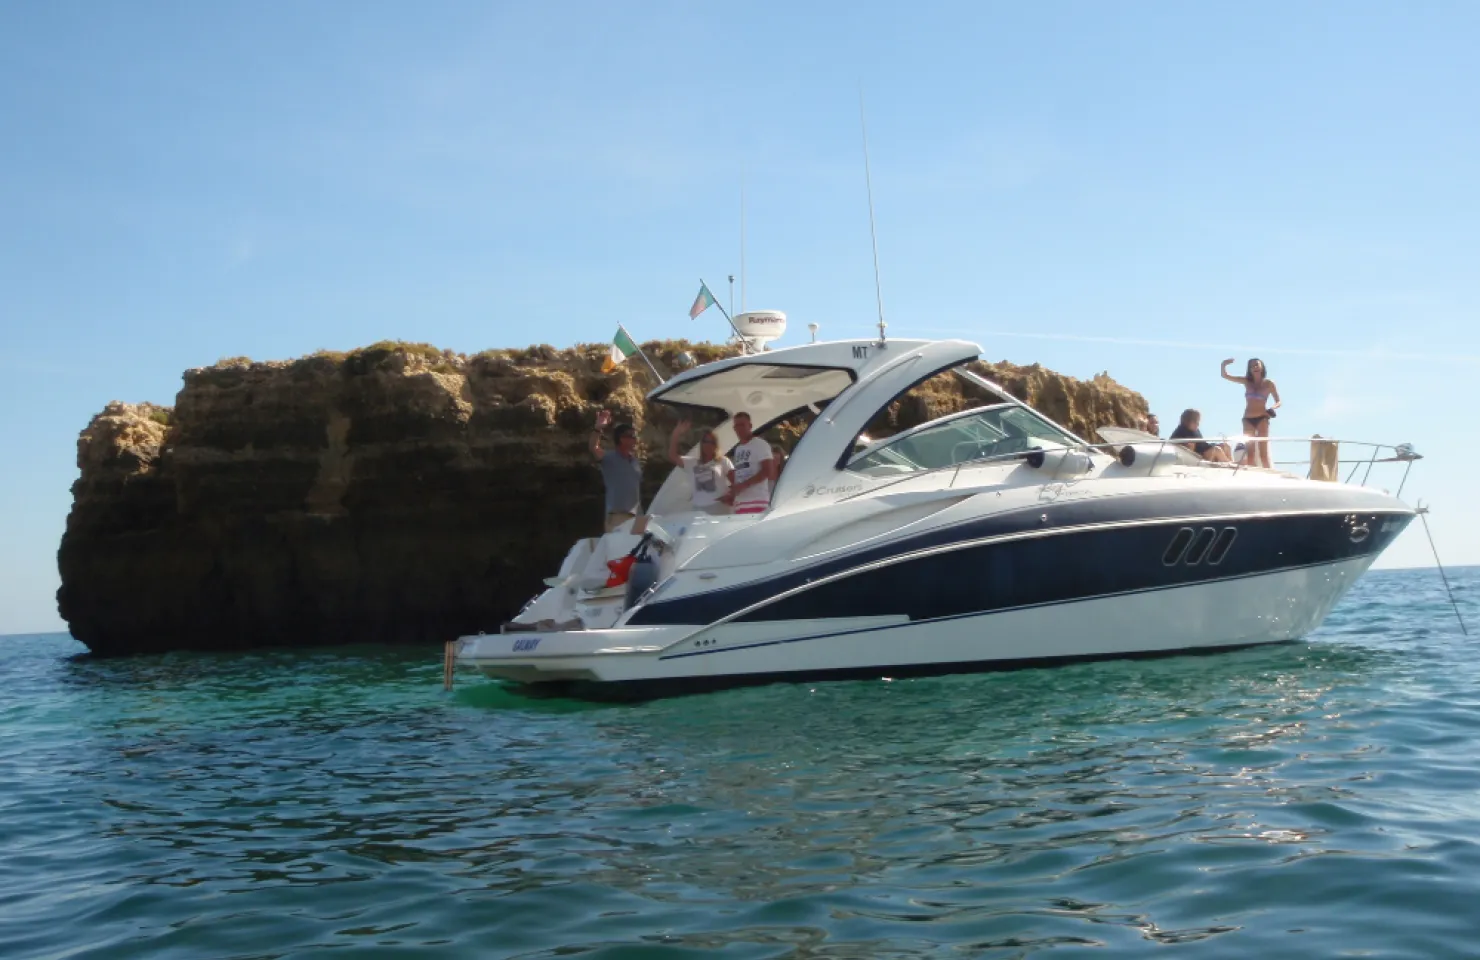 Algarve Majestic Cruises Vilamoura - Algarve Boat Trips and tours